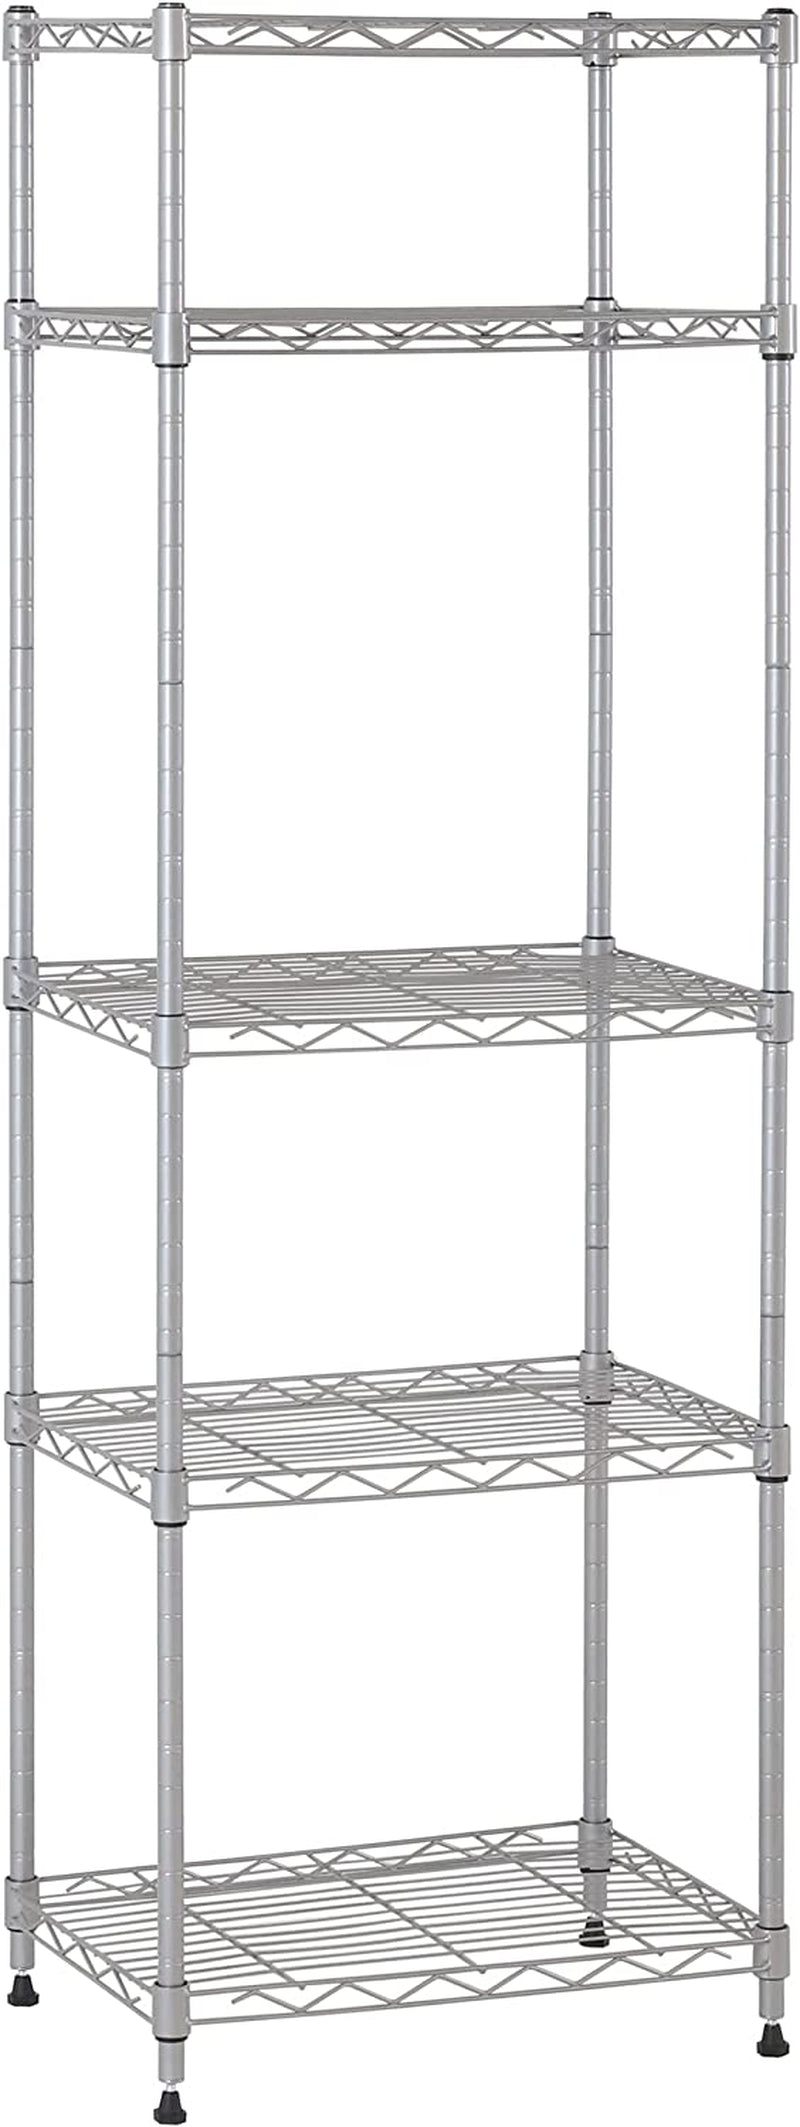 5 Wire Shelving Steel Rack Adjustable Unit Storage Shelves for Laundry Bathroom Kitchen Pantry Closet (16.6L X 11.8W X 48H)